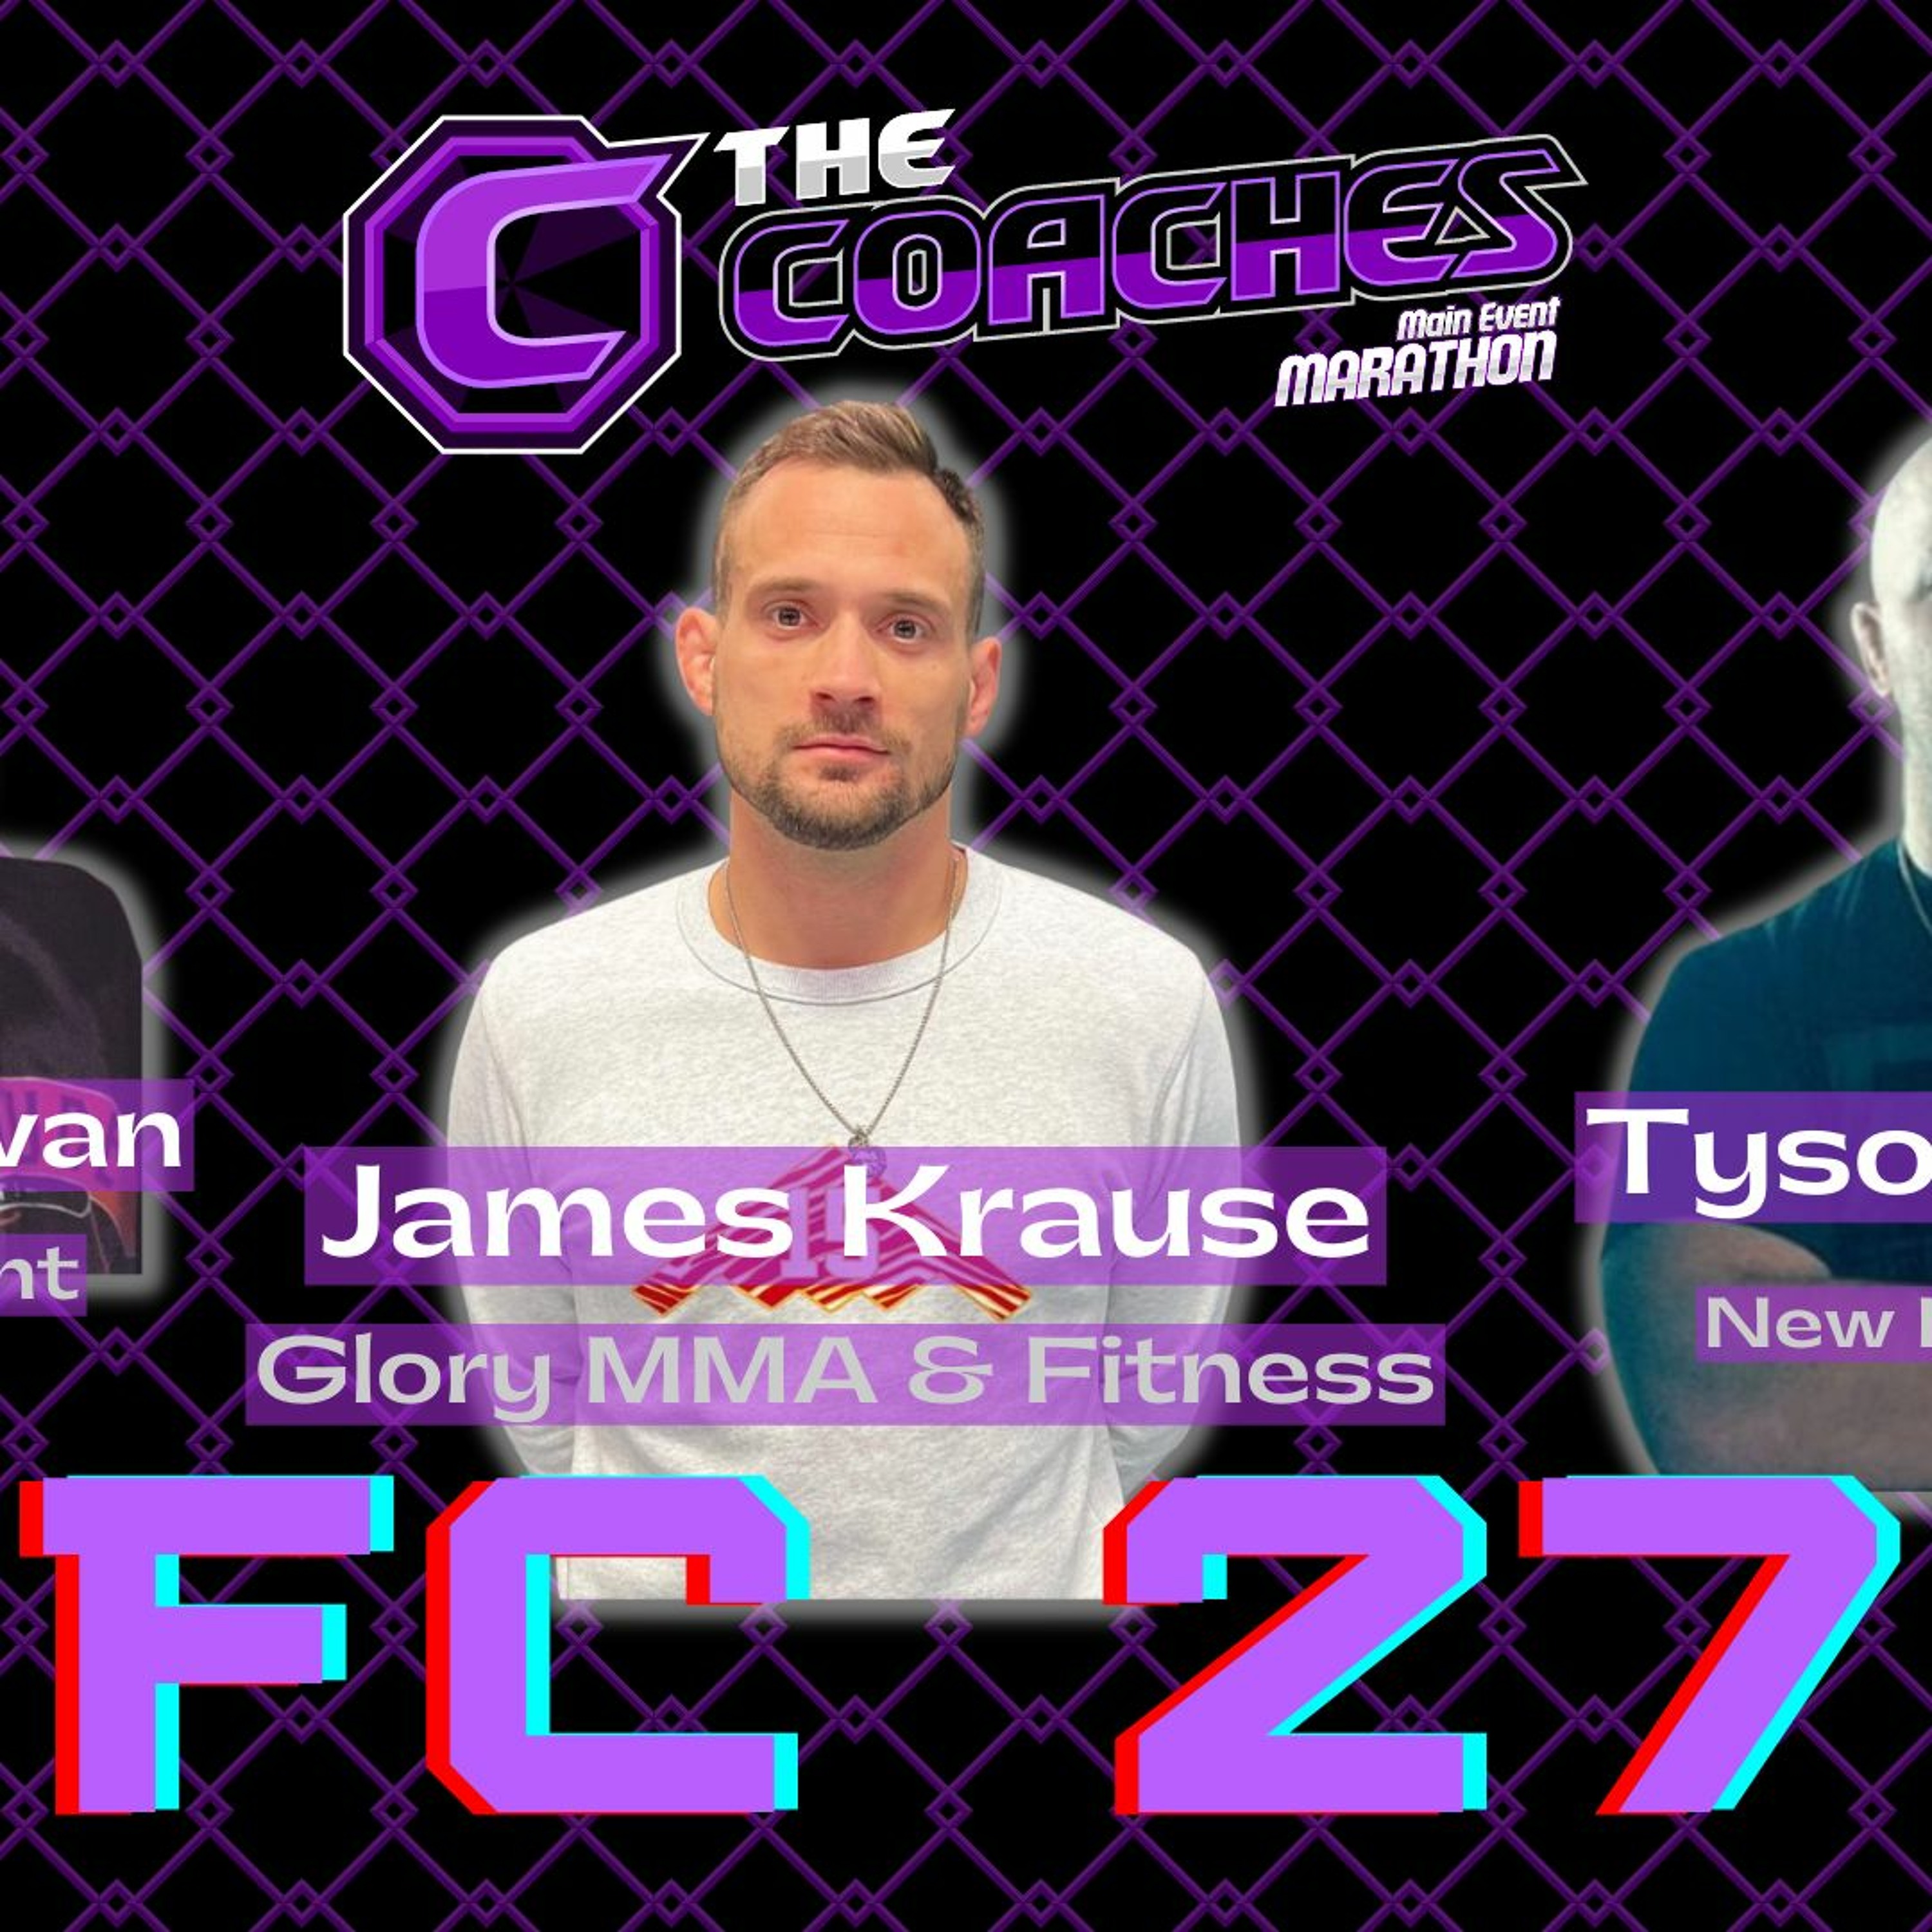 James Krause, Tyson Chartier, & Cody Donovan break down UFC 274 | The Coaches Main Event Marathon